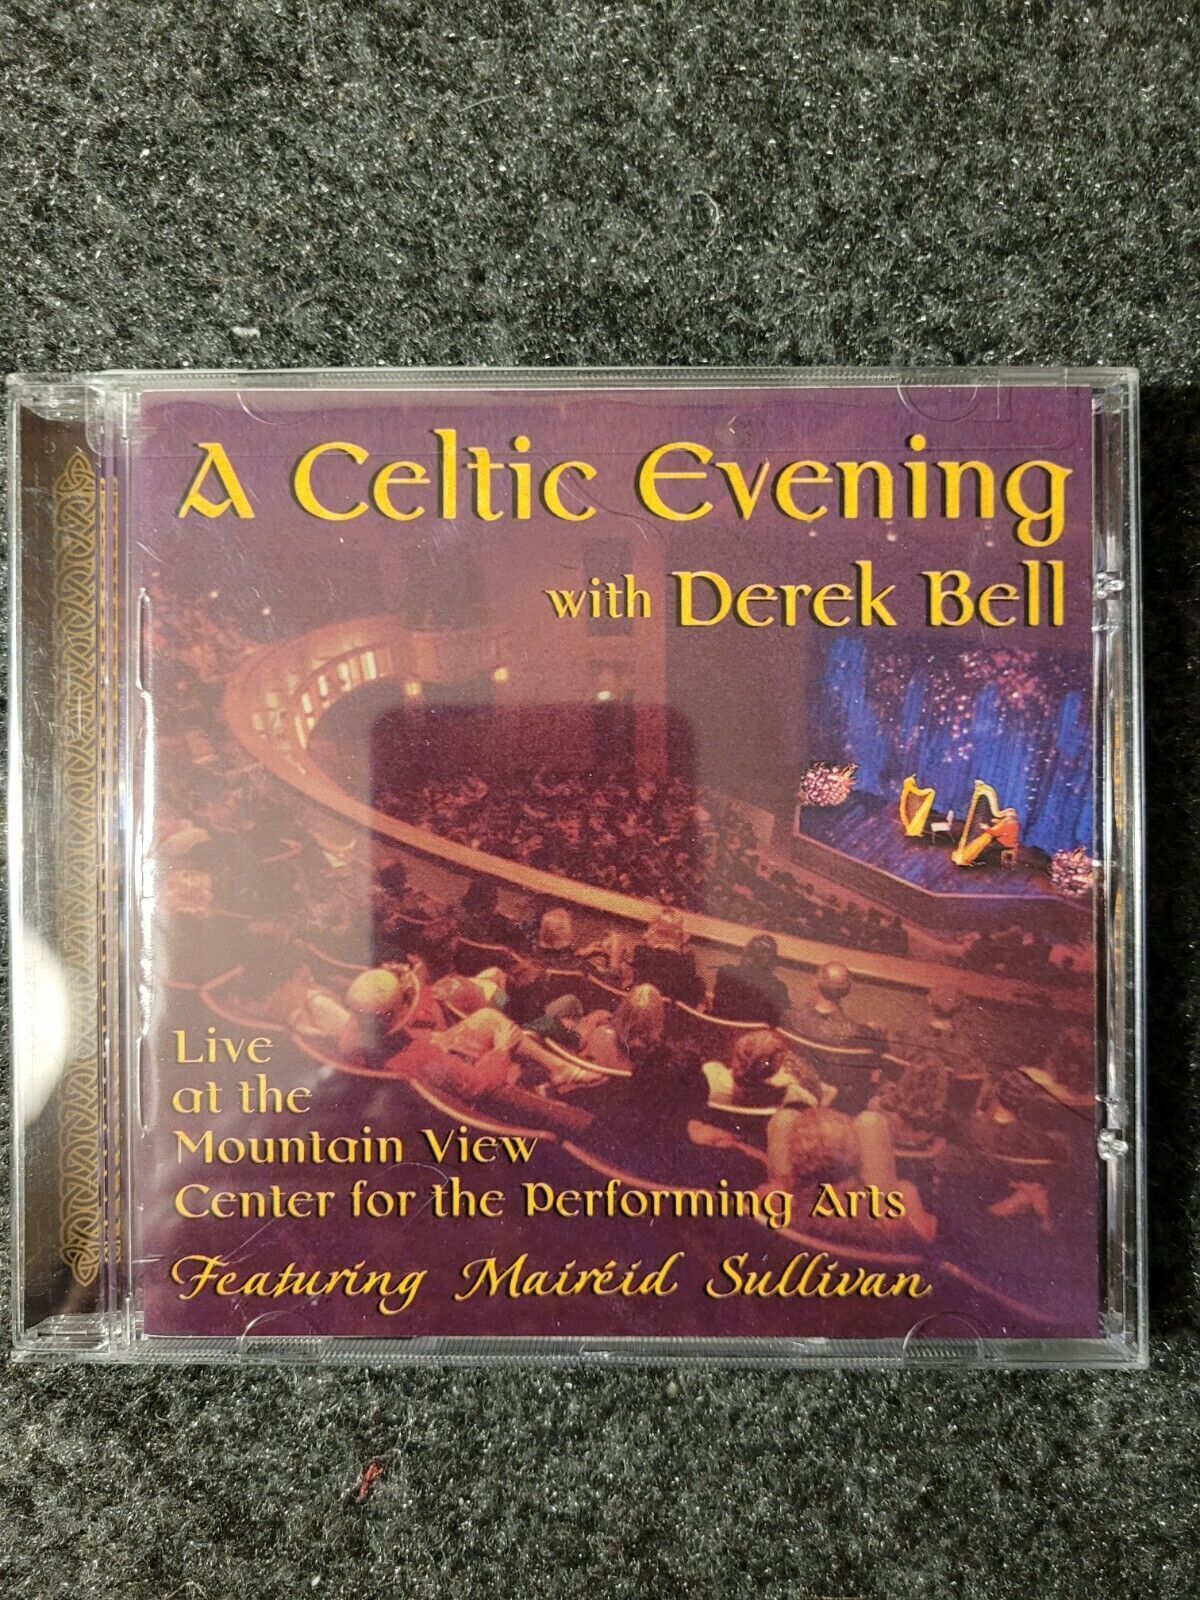 DEREK BELL - Celtic Evening With Derek Bell - CD - Live - Clarity Sound B6